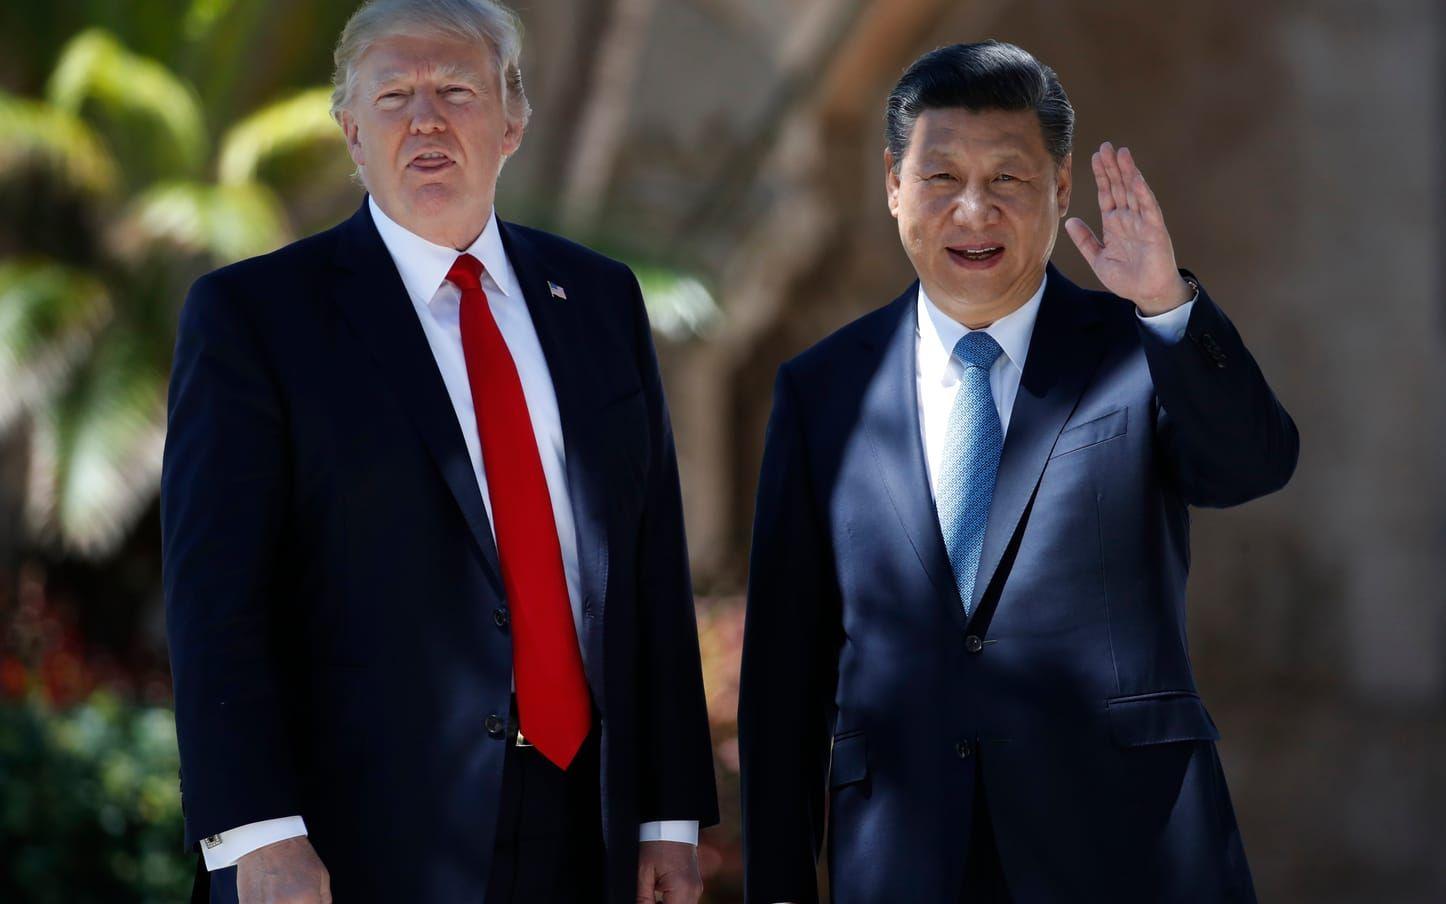 7 APRIL: Kinas president Xi Jinping träffar Trump i hans residens i Mar-a-Lago, Florida. Foto: TT